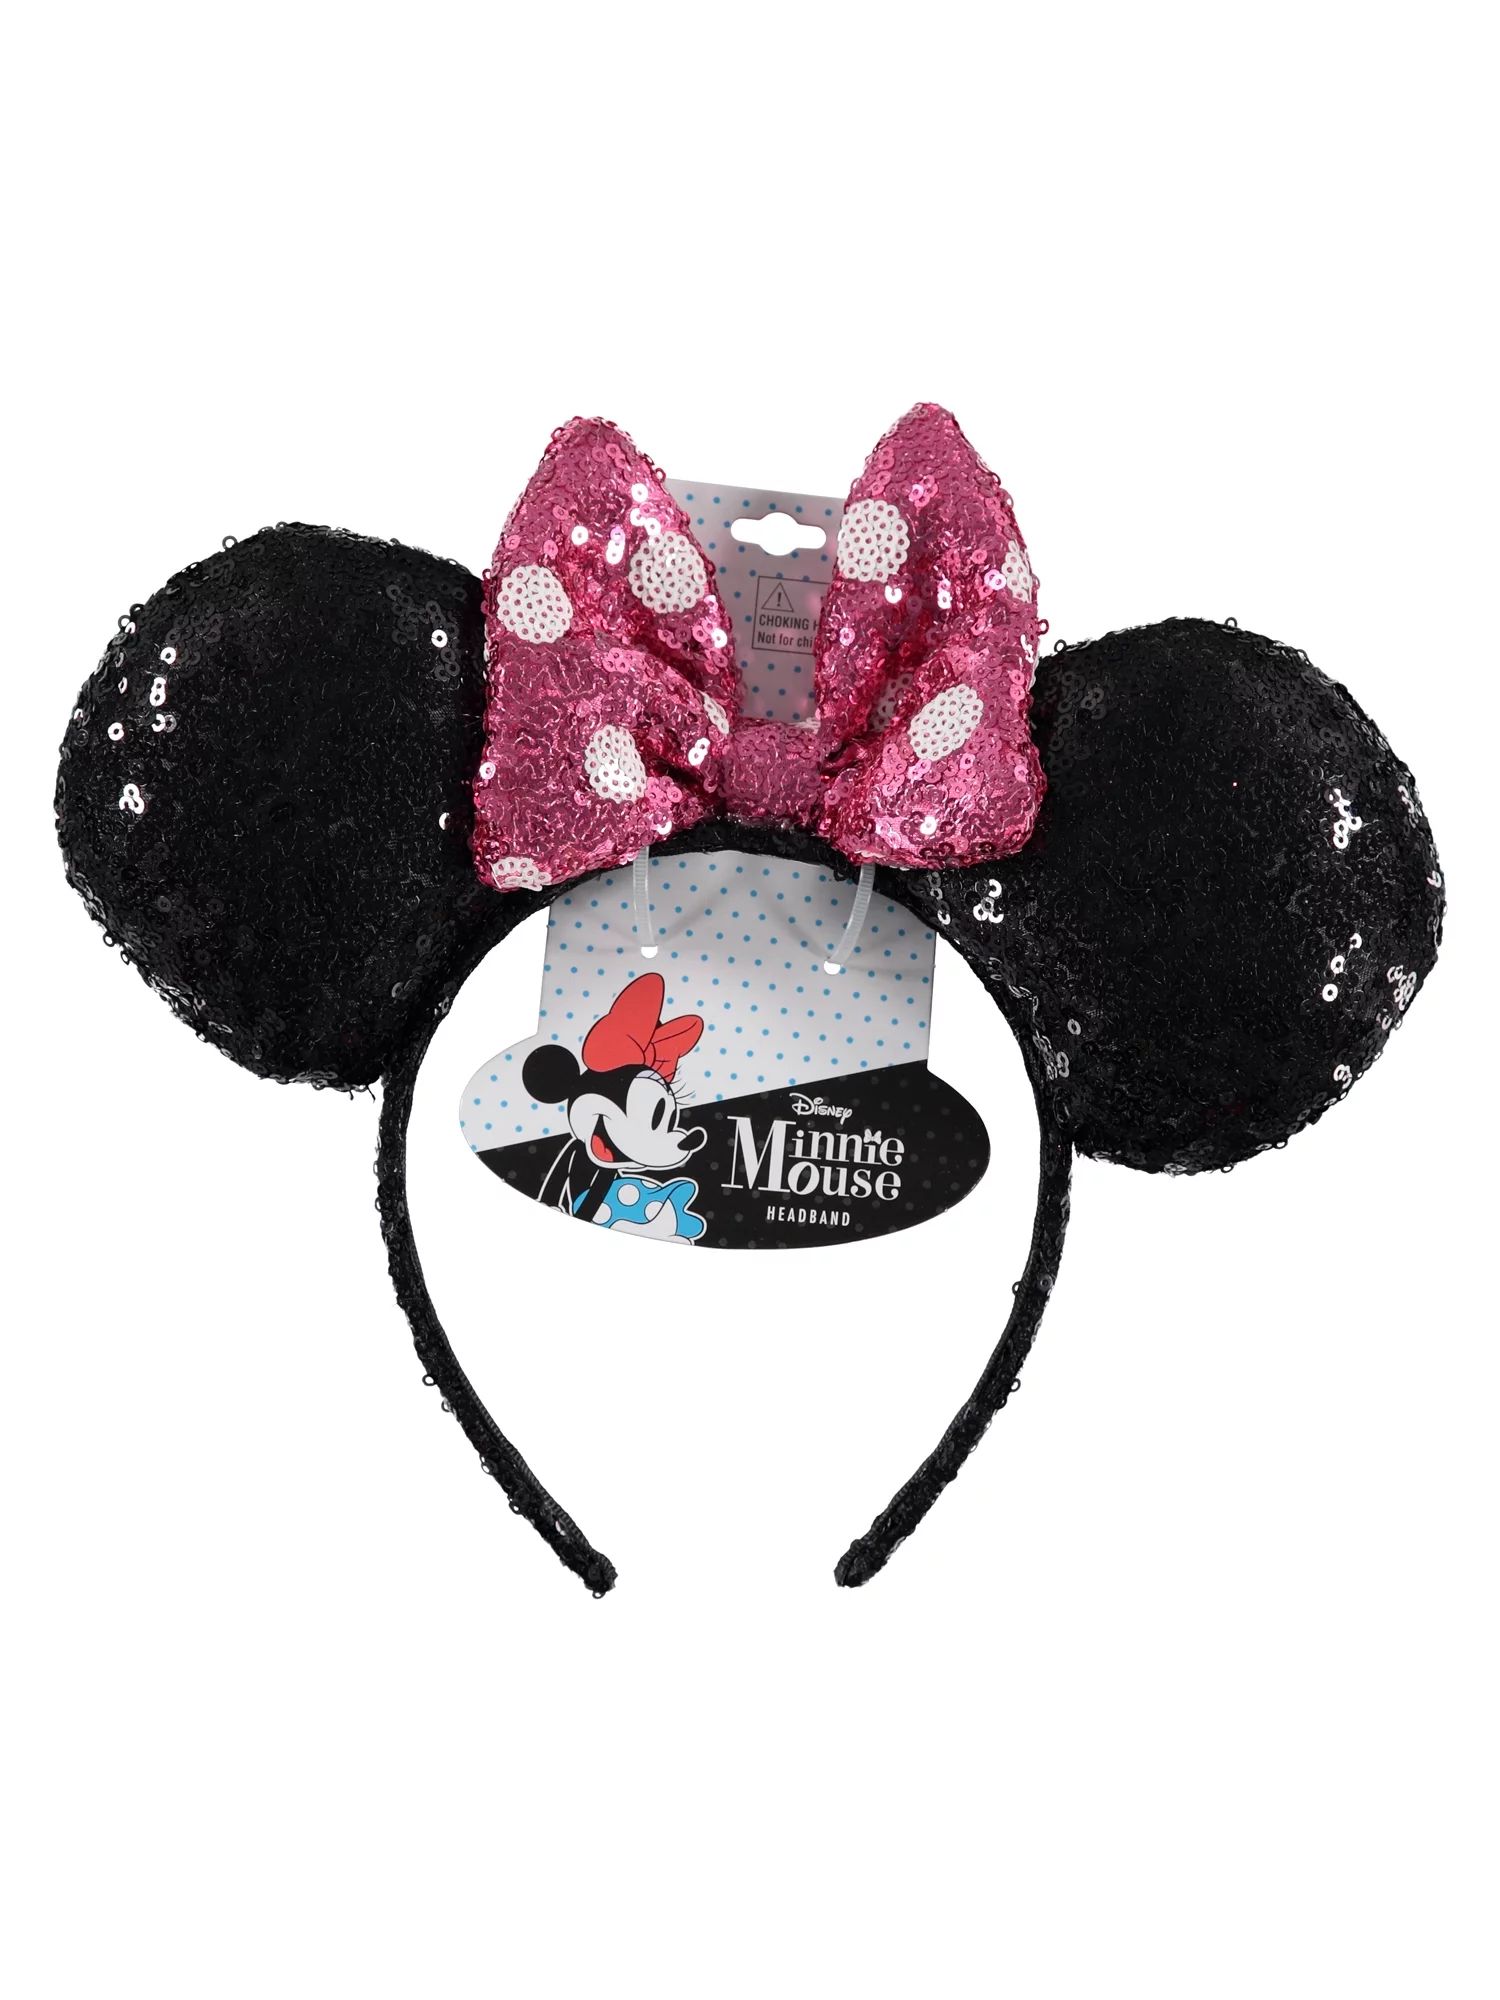 Minnie Mouse Ears Headband Polka Dot Bow Party Costume Accessory | Walmart (US)